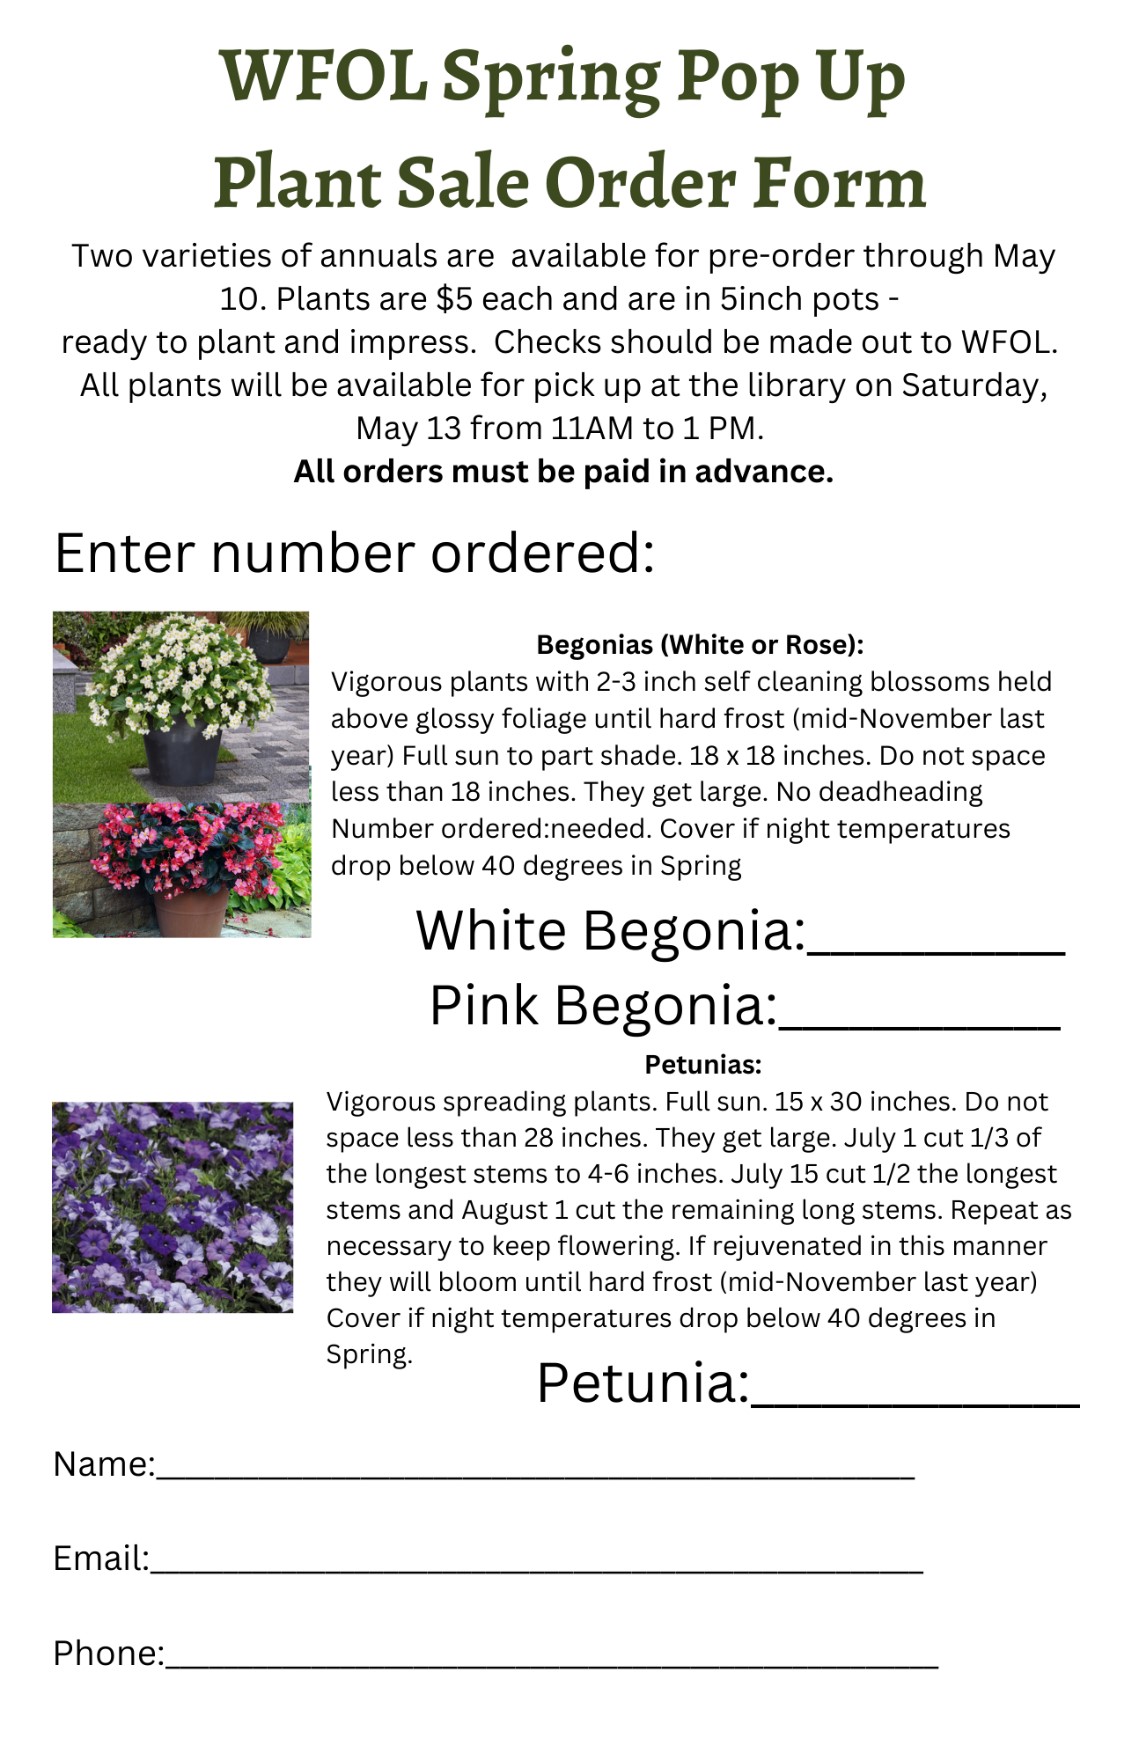 Plant sale order form